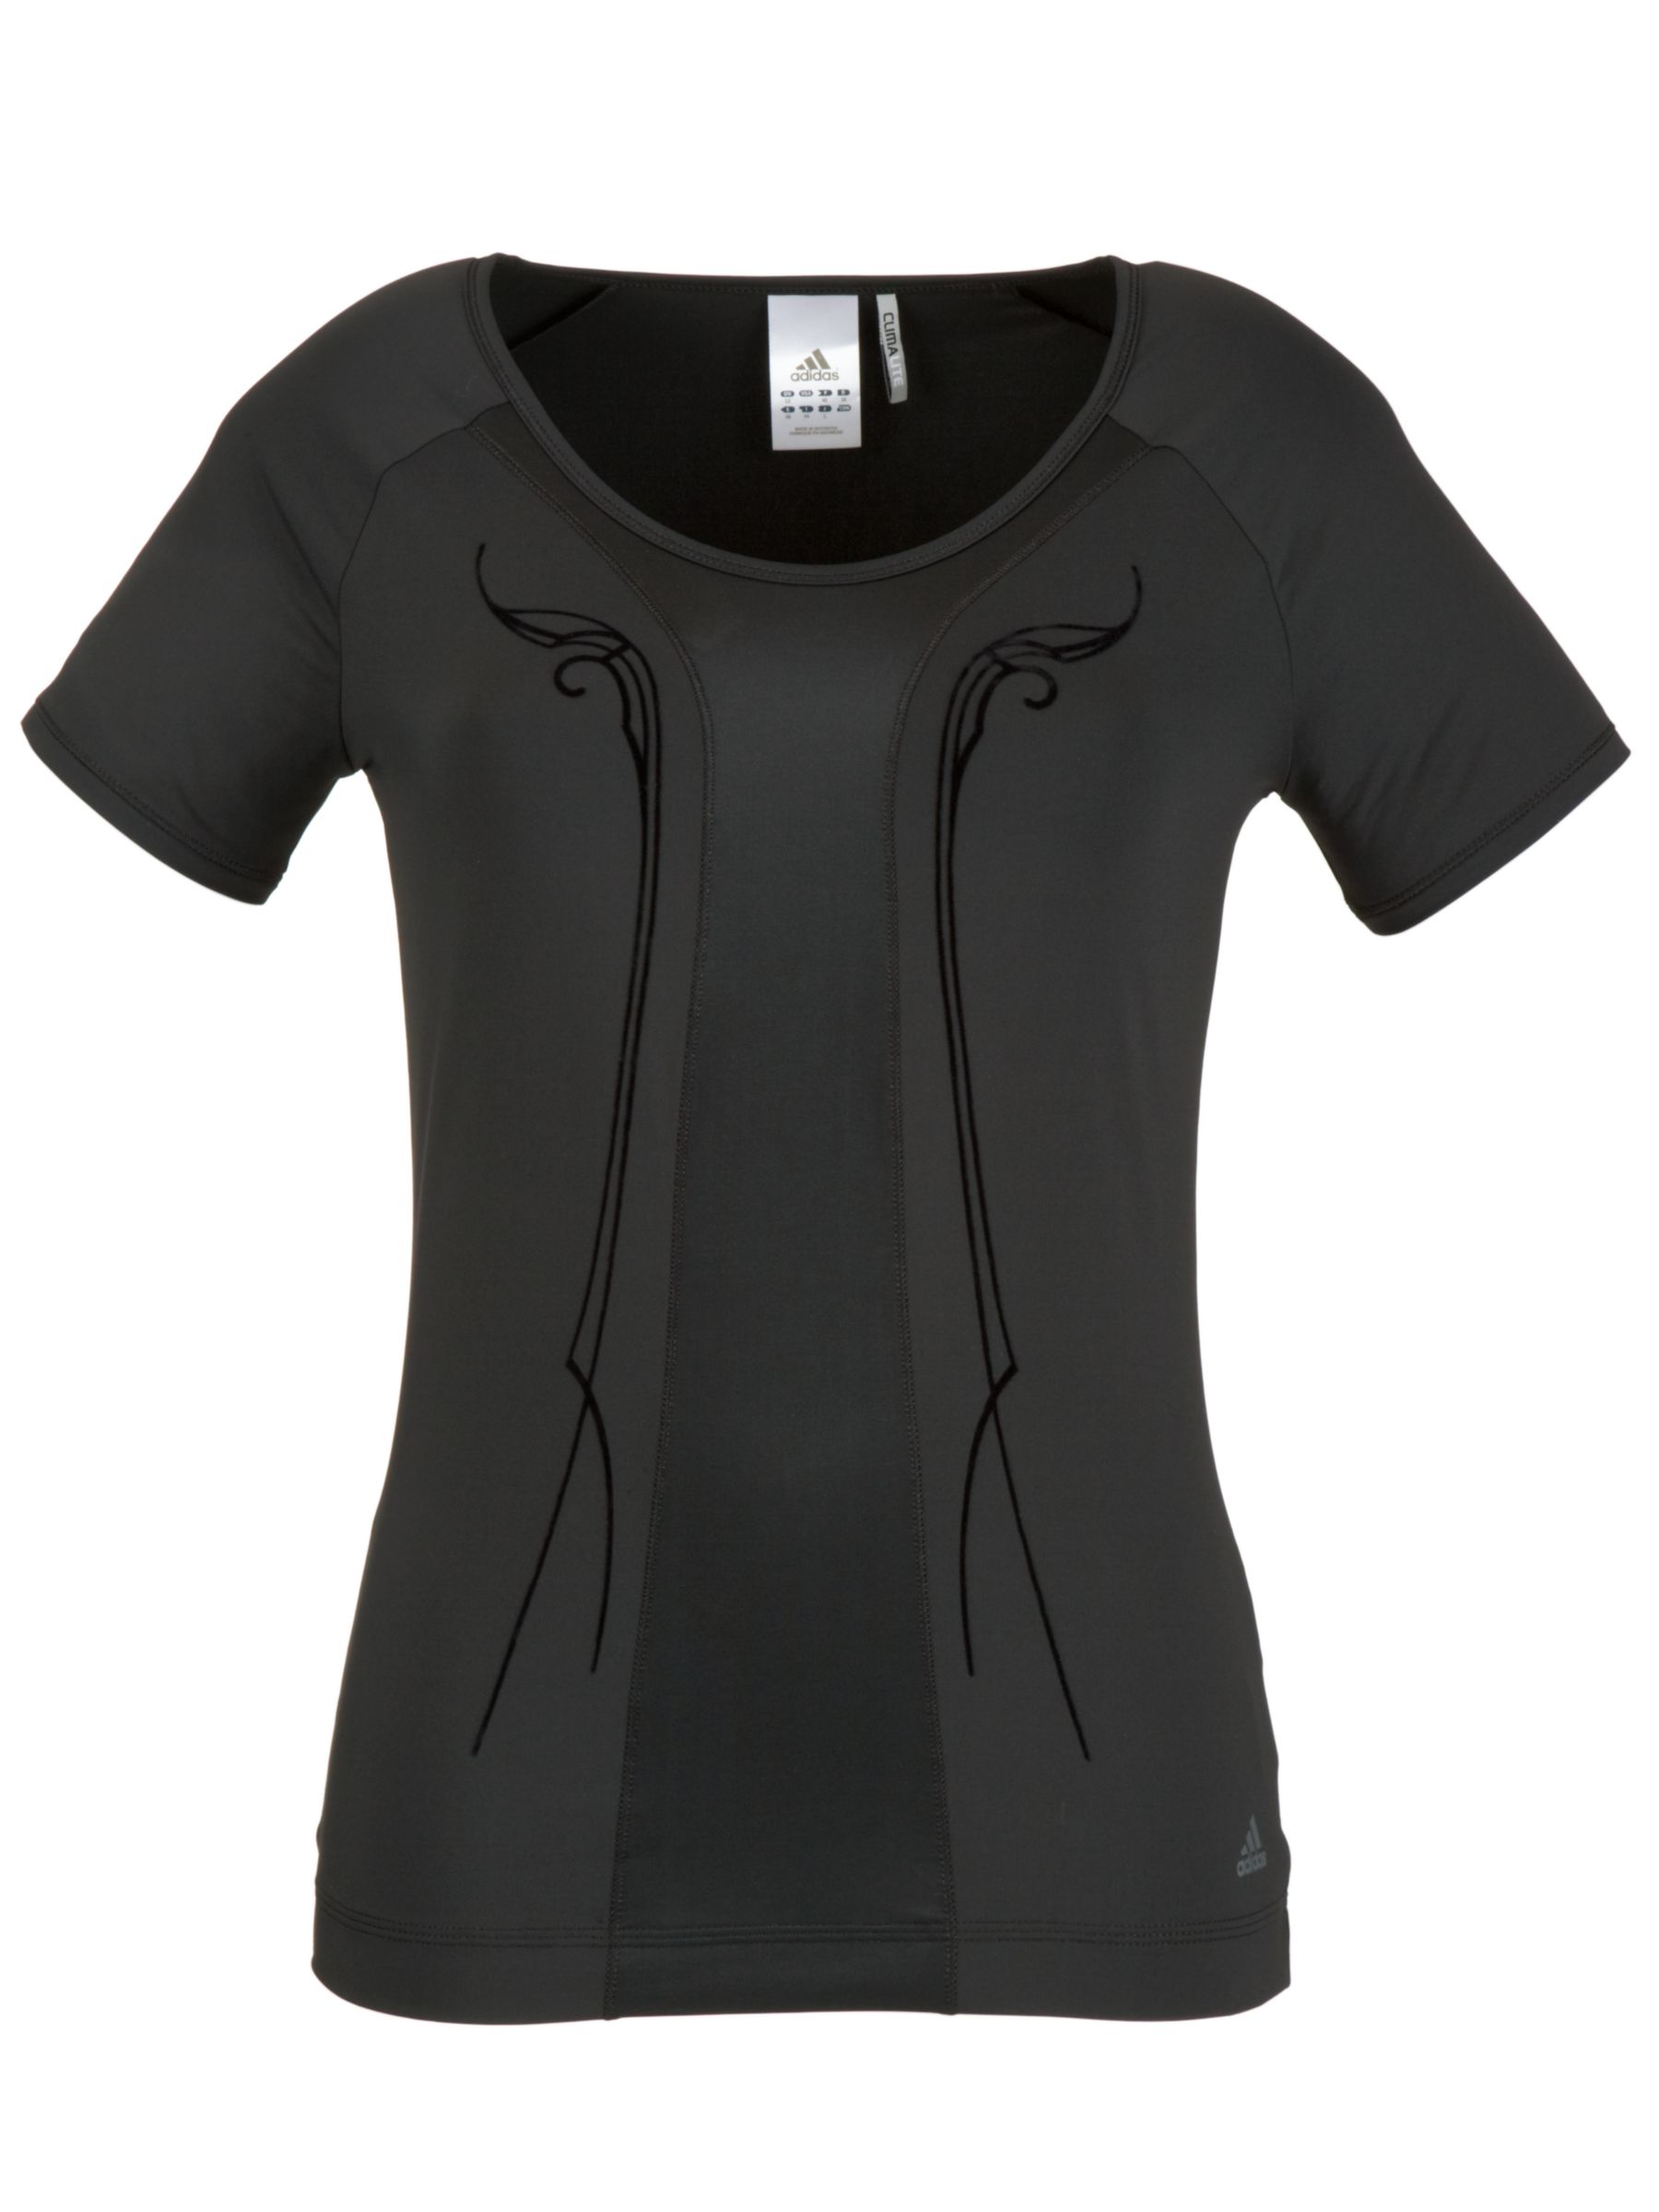 Adidas Adilibria Core T-Shirt, Black